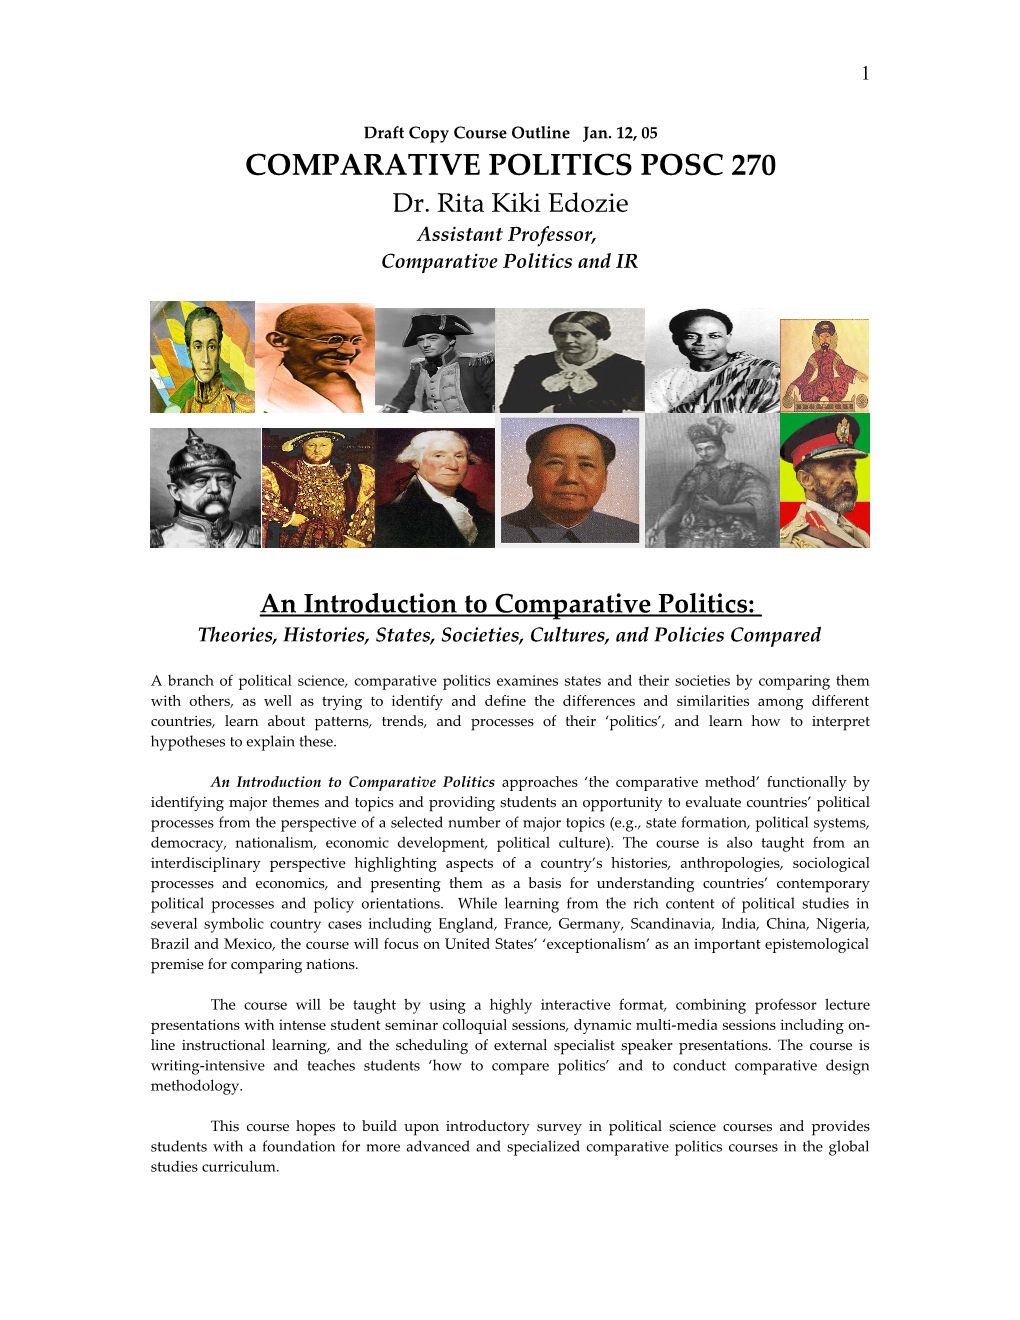 Comparative Politics Posc 270